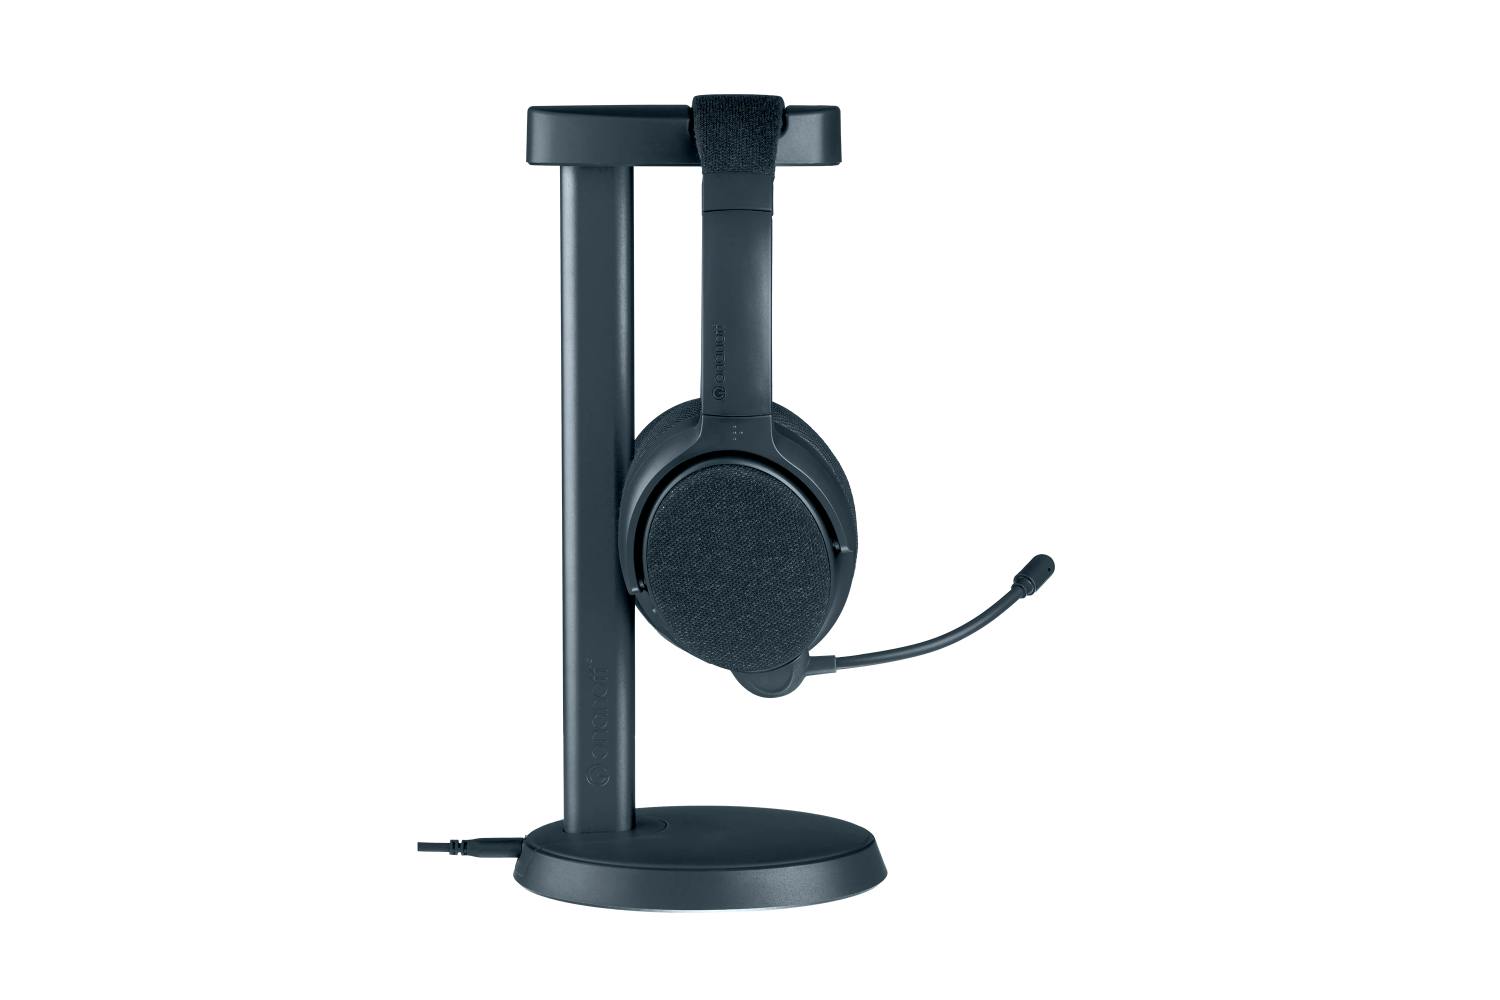 Fokus+ ANC Bluetooth Headphones with Wireless Charging Stand – onanoff